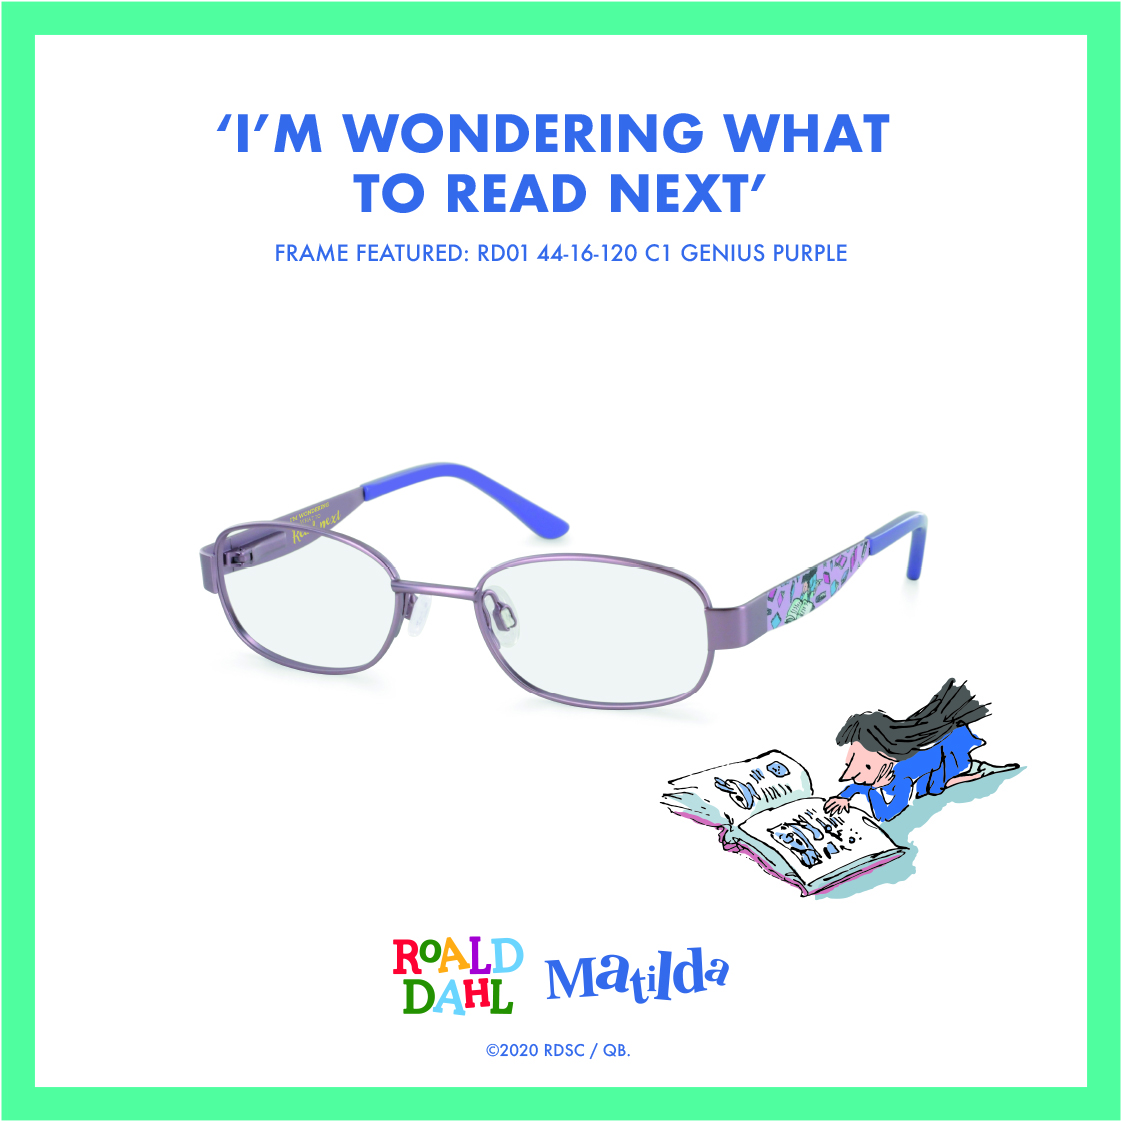 Roald Dahl eyewear arrives for International Book Day